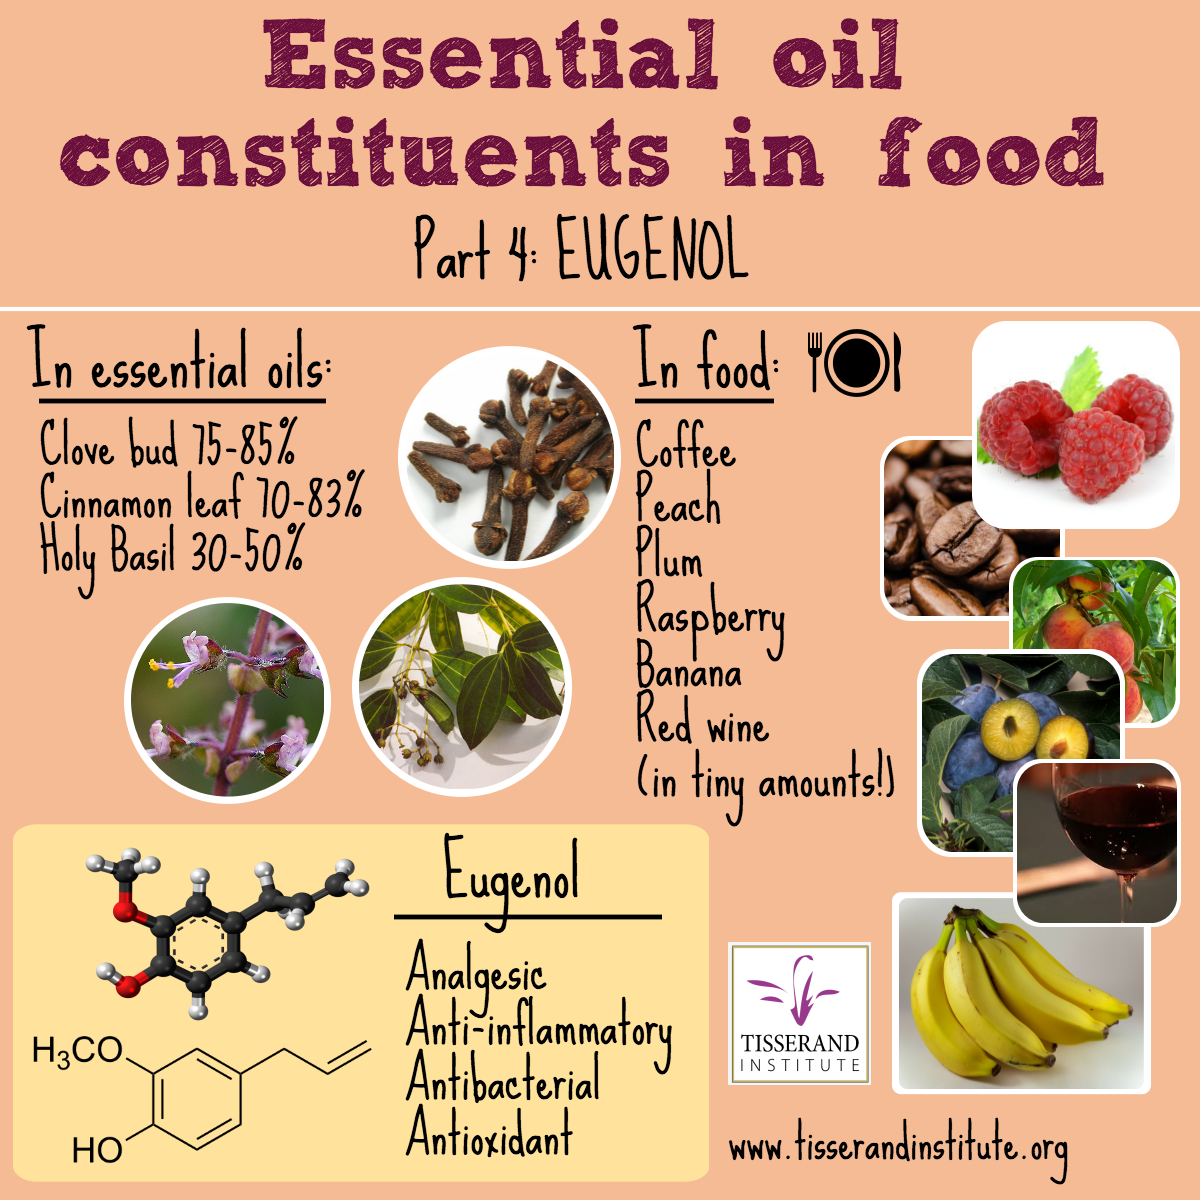 Eugenol: Essential Oil Constituents in Food Part 4